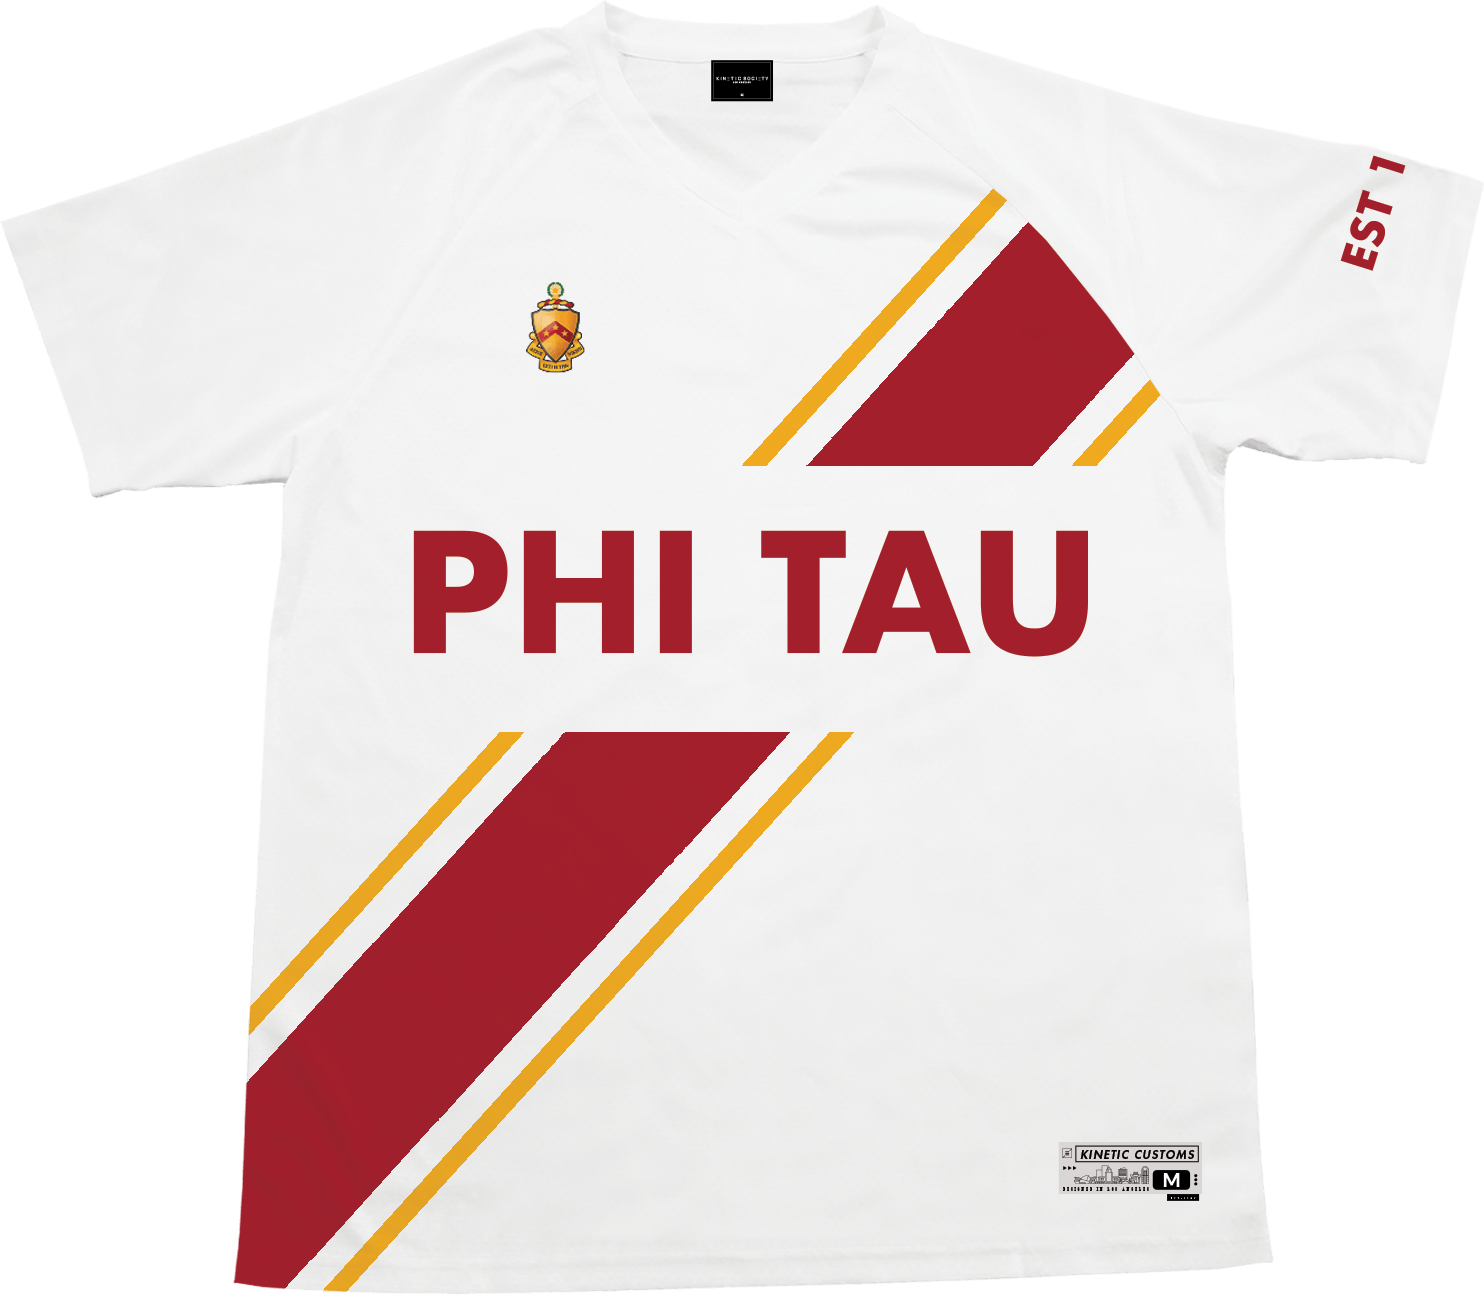 Phi Kappa Tau - Home Team Soccer Jersey Soccer Kinetic Society LLC 